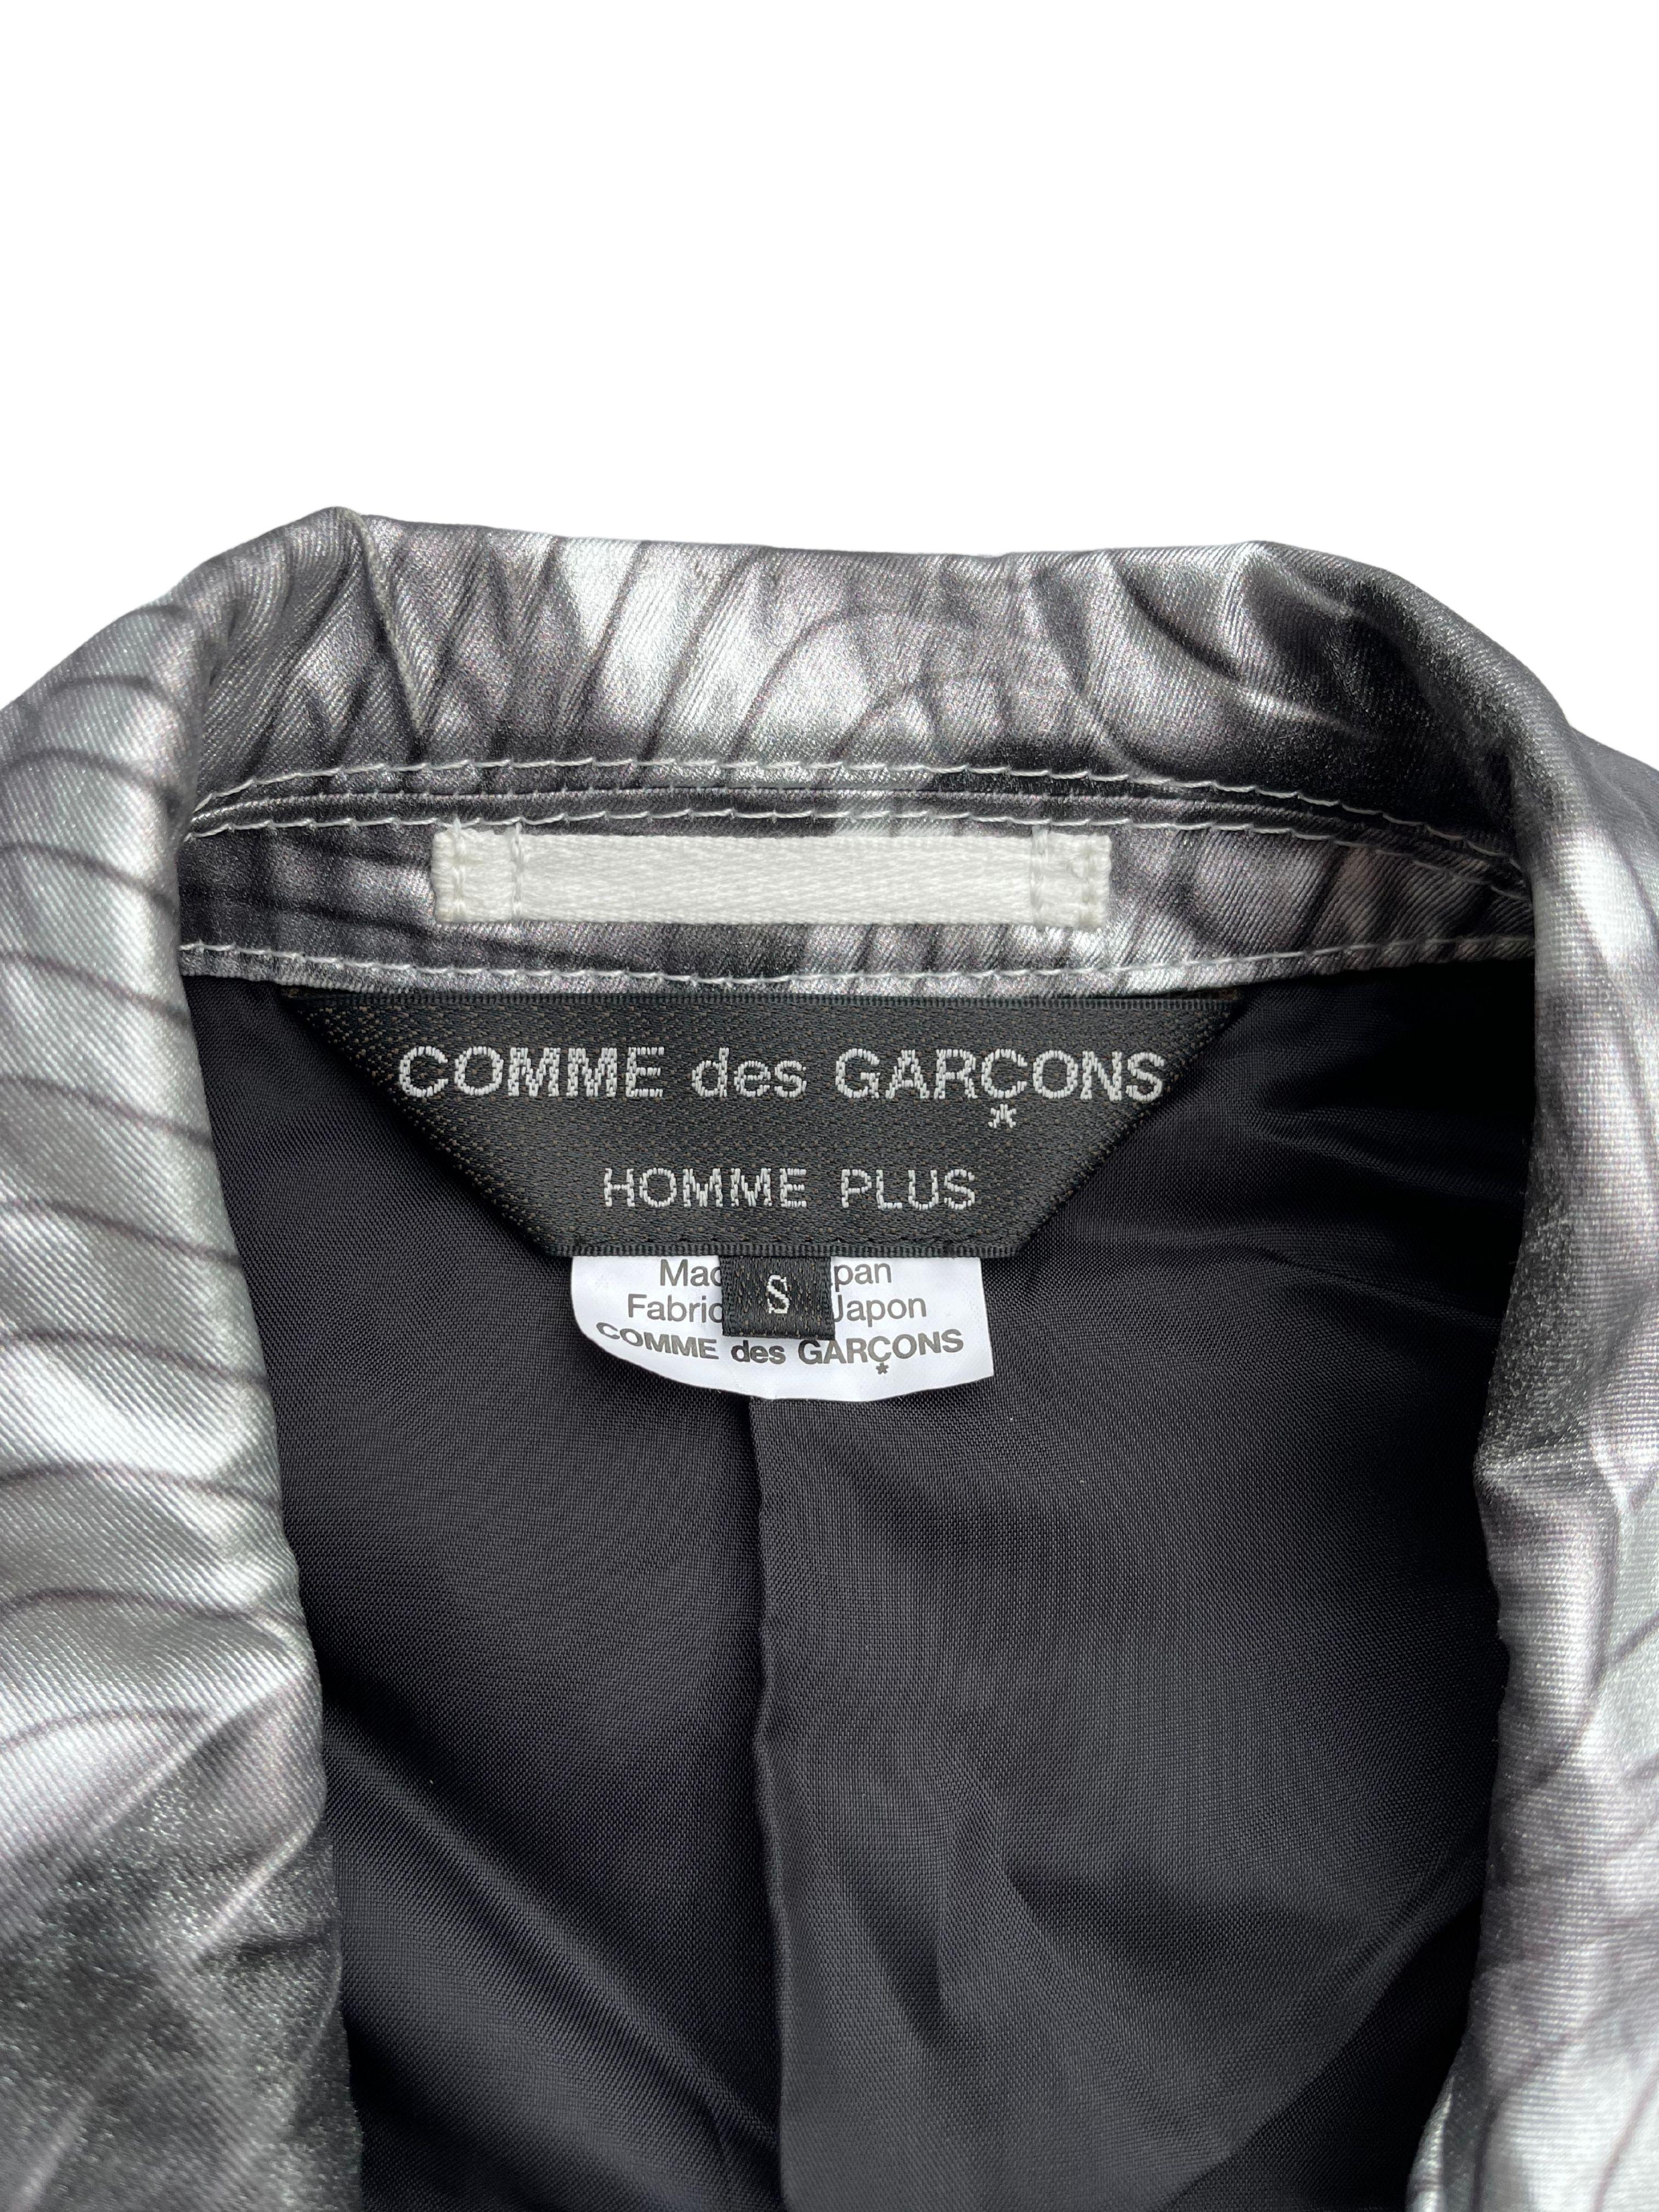 Comme Des Garcons Homme Plus Sheer Metal Riders Jacket, Spring Summer 2021 For Sale 12